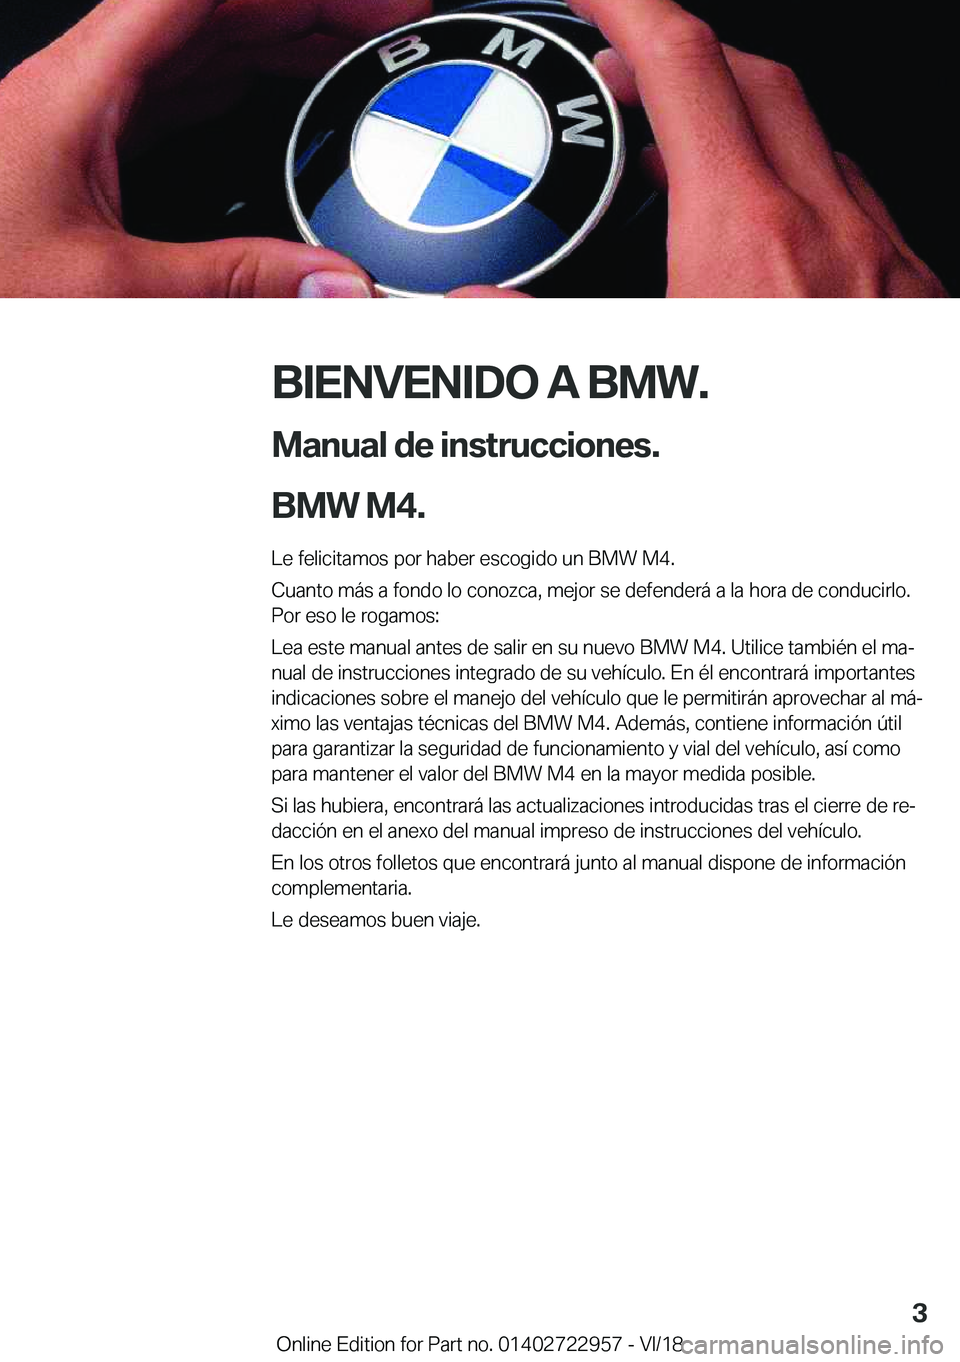 BMW M4 2019  Manuales de Empleo (in Spanish) �B�I�E�N�V�E�N�I�D�O��A��B�M�W�.
�M�a�n�u�a�l��d�e��i�n�s�t�r�u�c�c�i�o�n�e�s�.
�B�M�W��M�4�. �L�e��f�e�l�i�c�i�t�a�m�o�s��p�o�r��h�a�b�e�r��e�s�c�o�g�i�d�o��u�n��B�M�W��M�4�.
�C�u�a�n�t�o